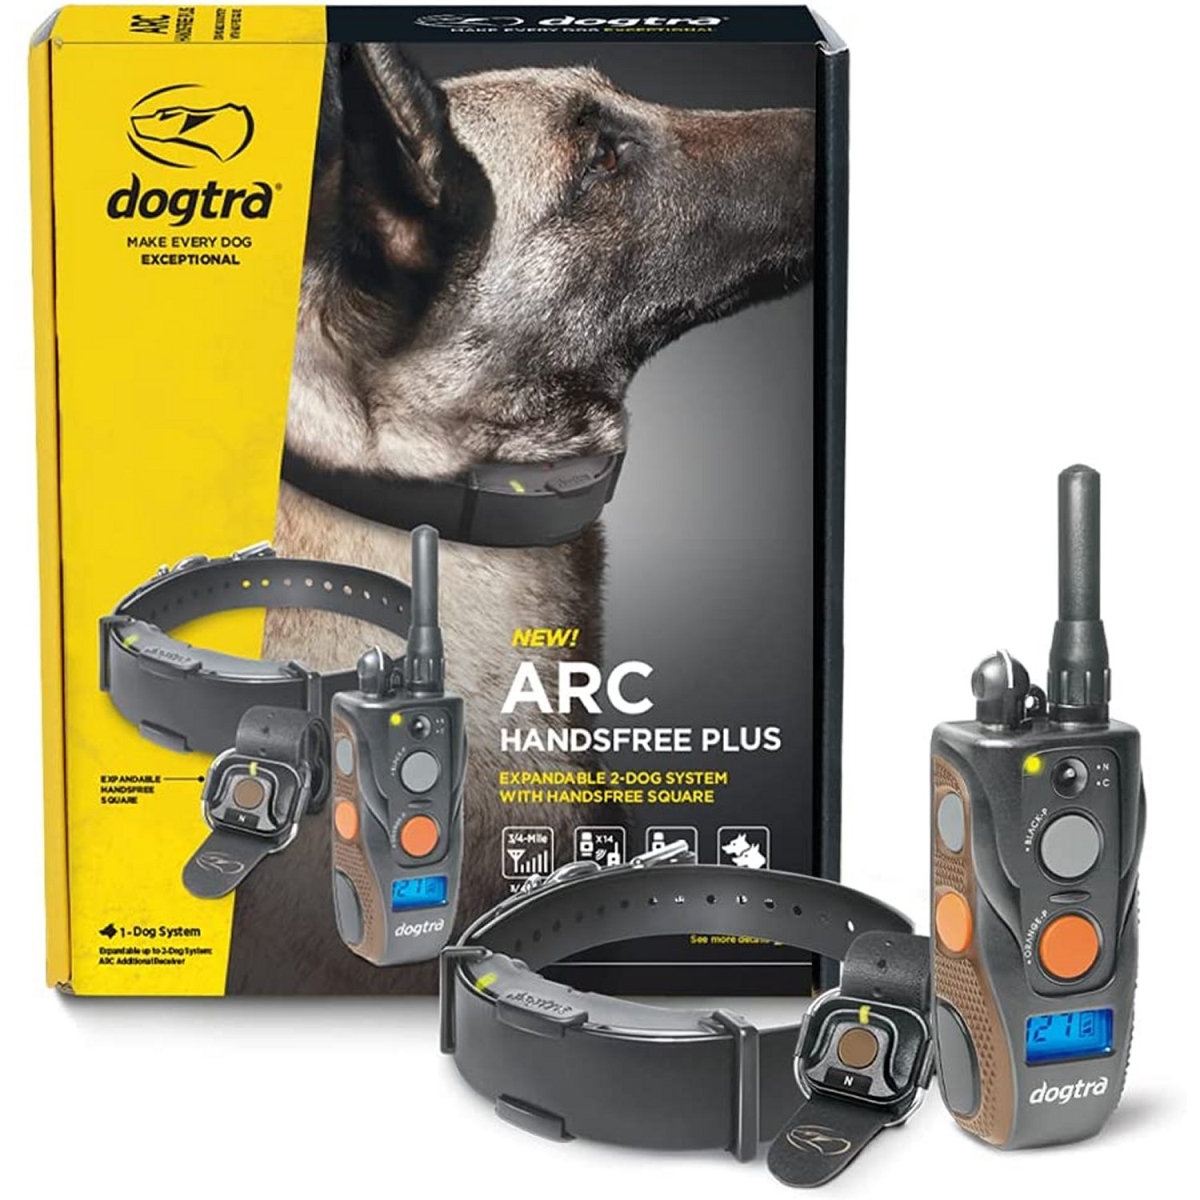 Picture of Dogtra ARC HANDSFREE PLUS Handsfree Plus Dog Training Collar